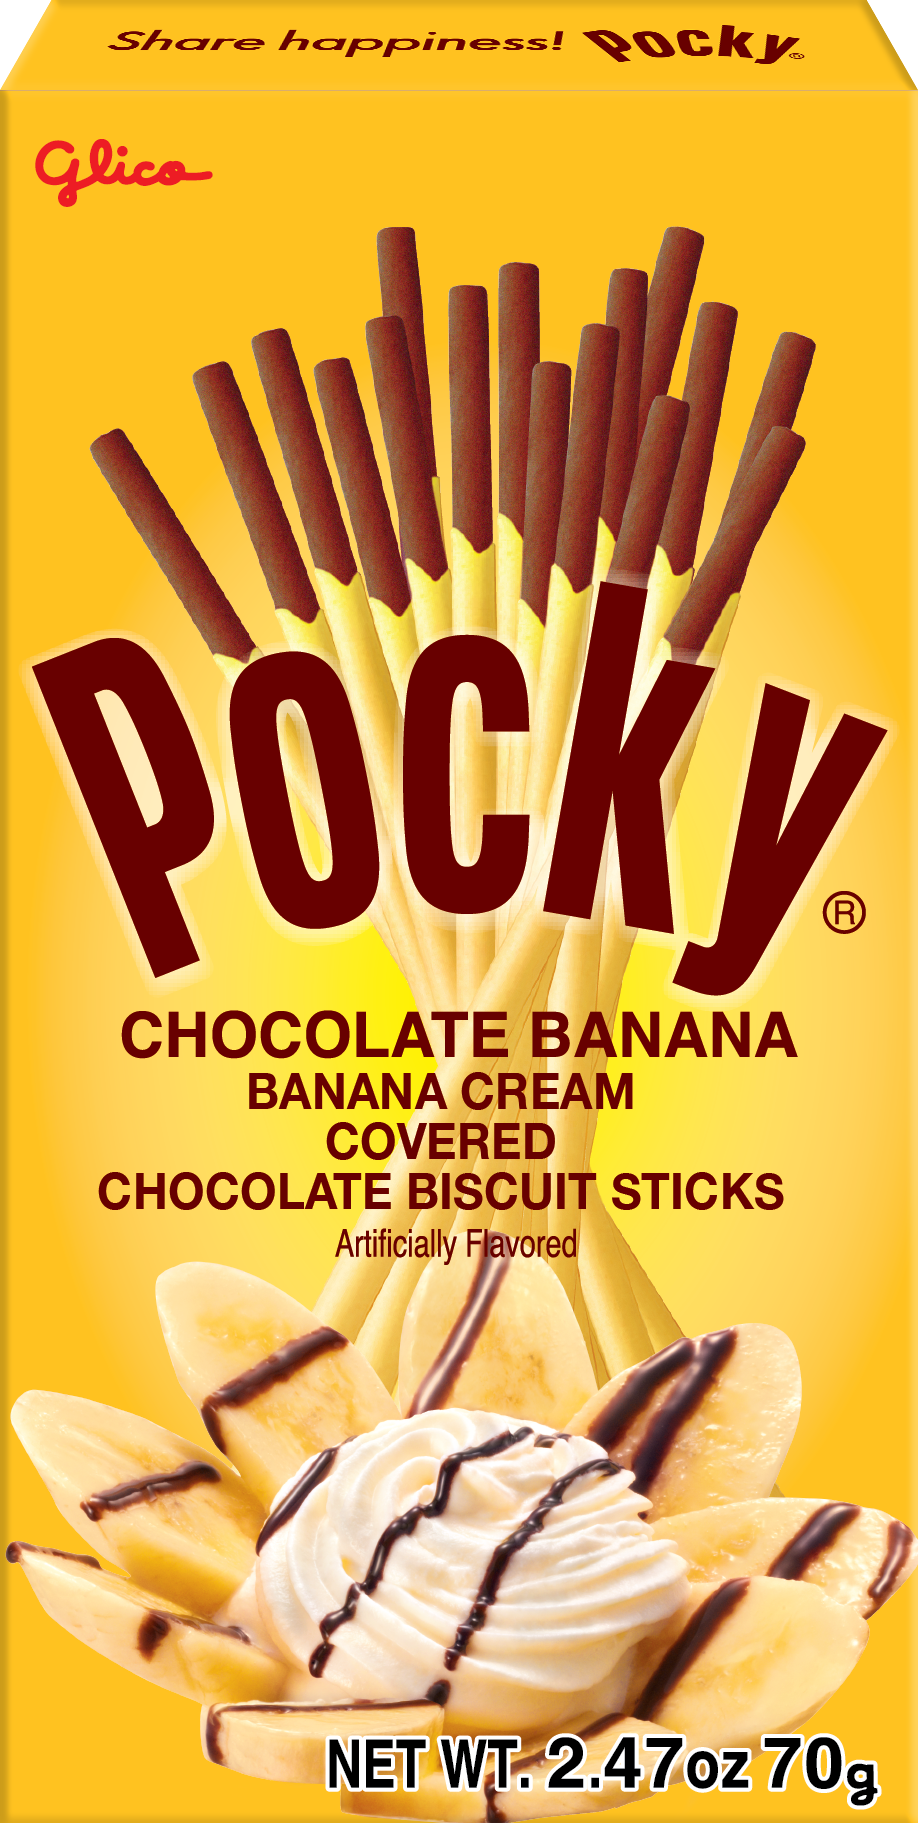 Pocky Chocolate Banana 2.47oz | Ezaki Glico USA Corporation